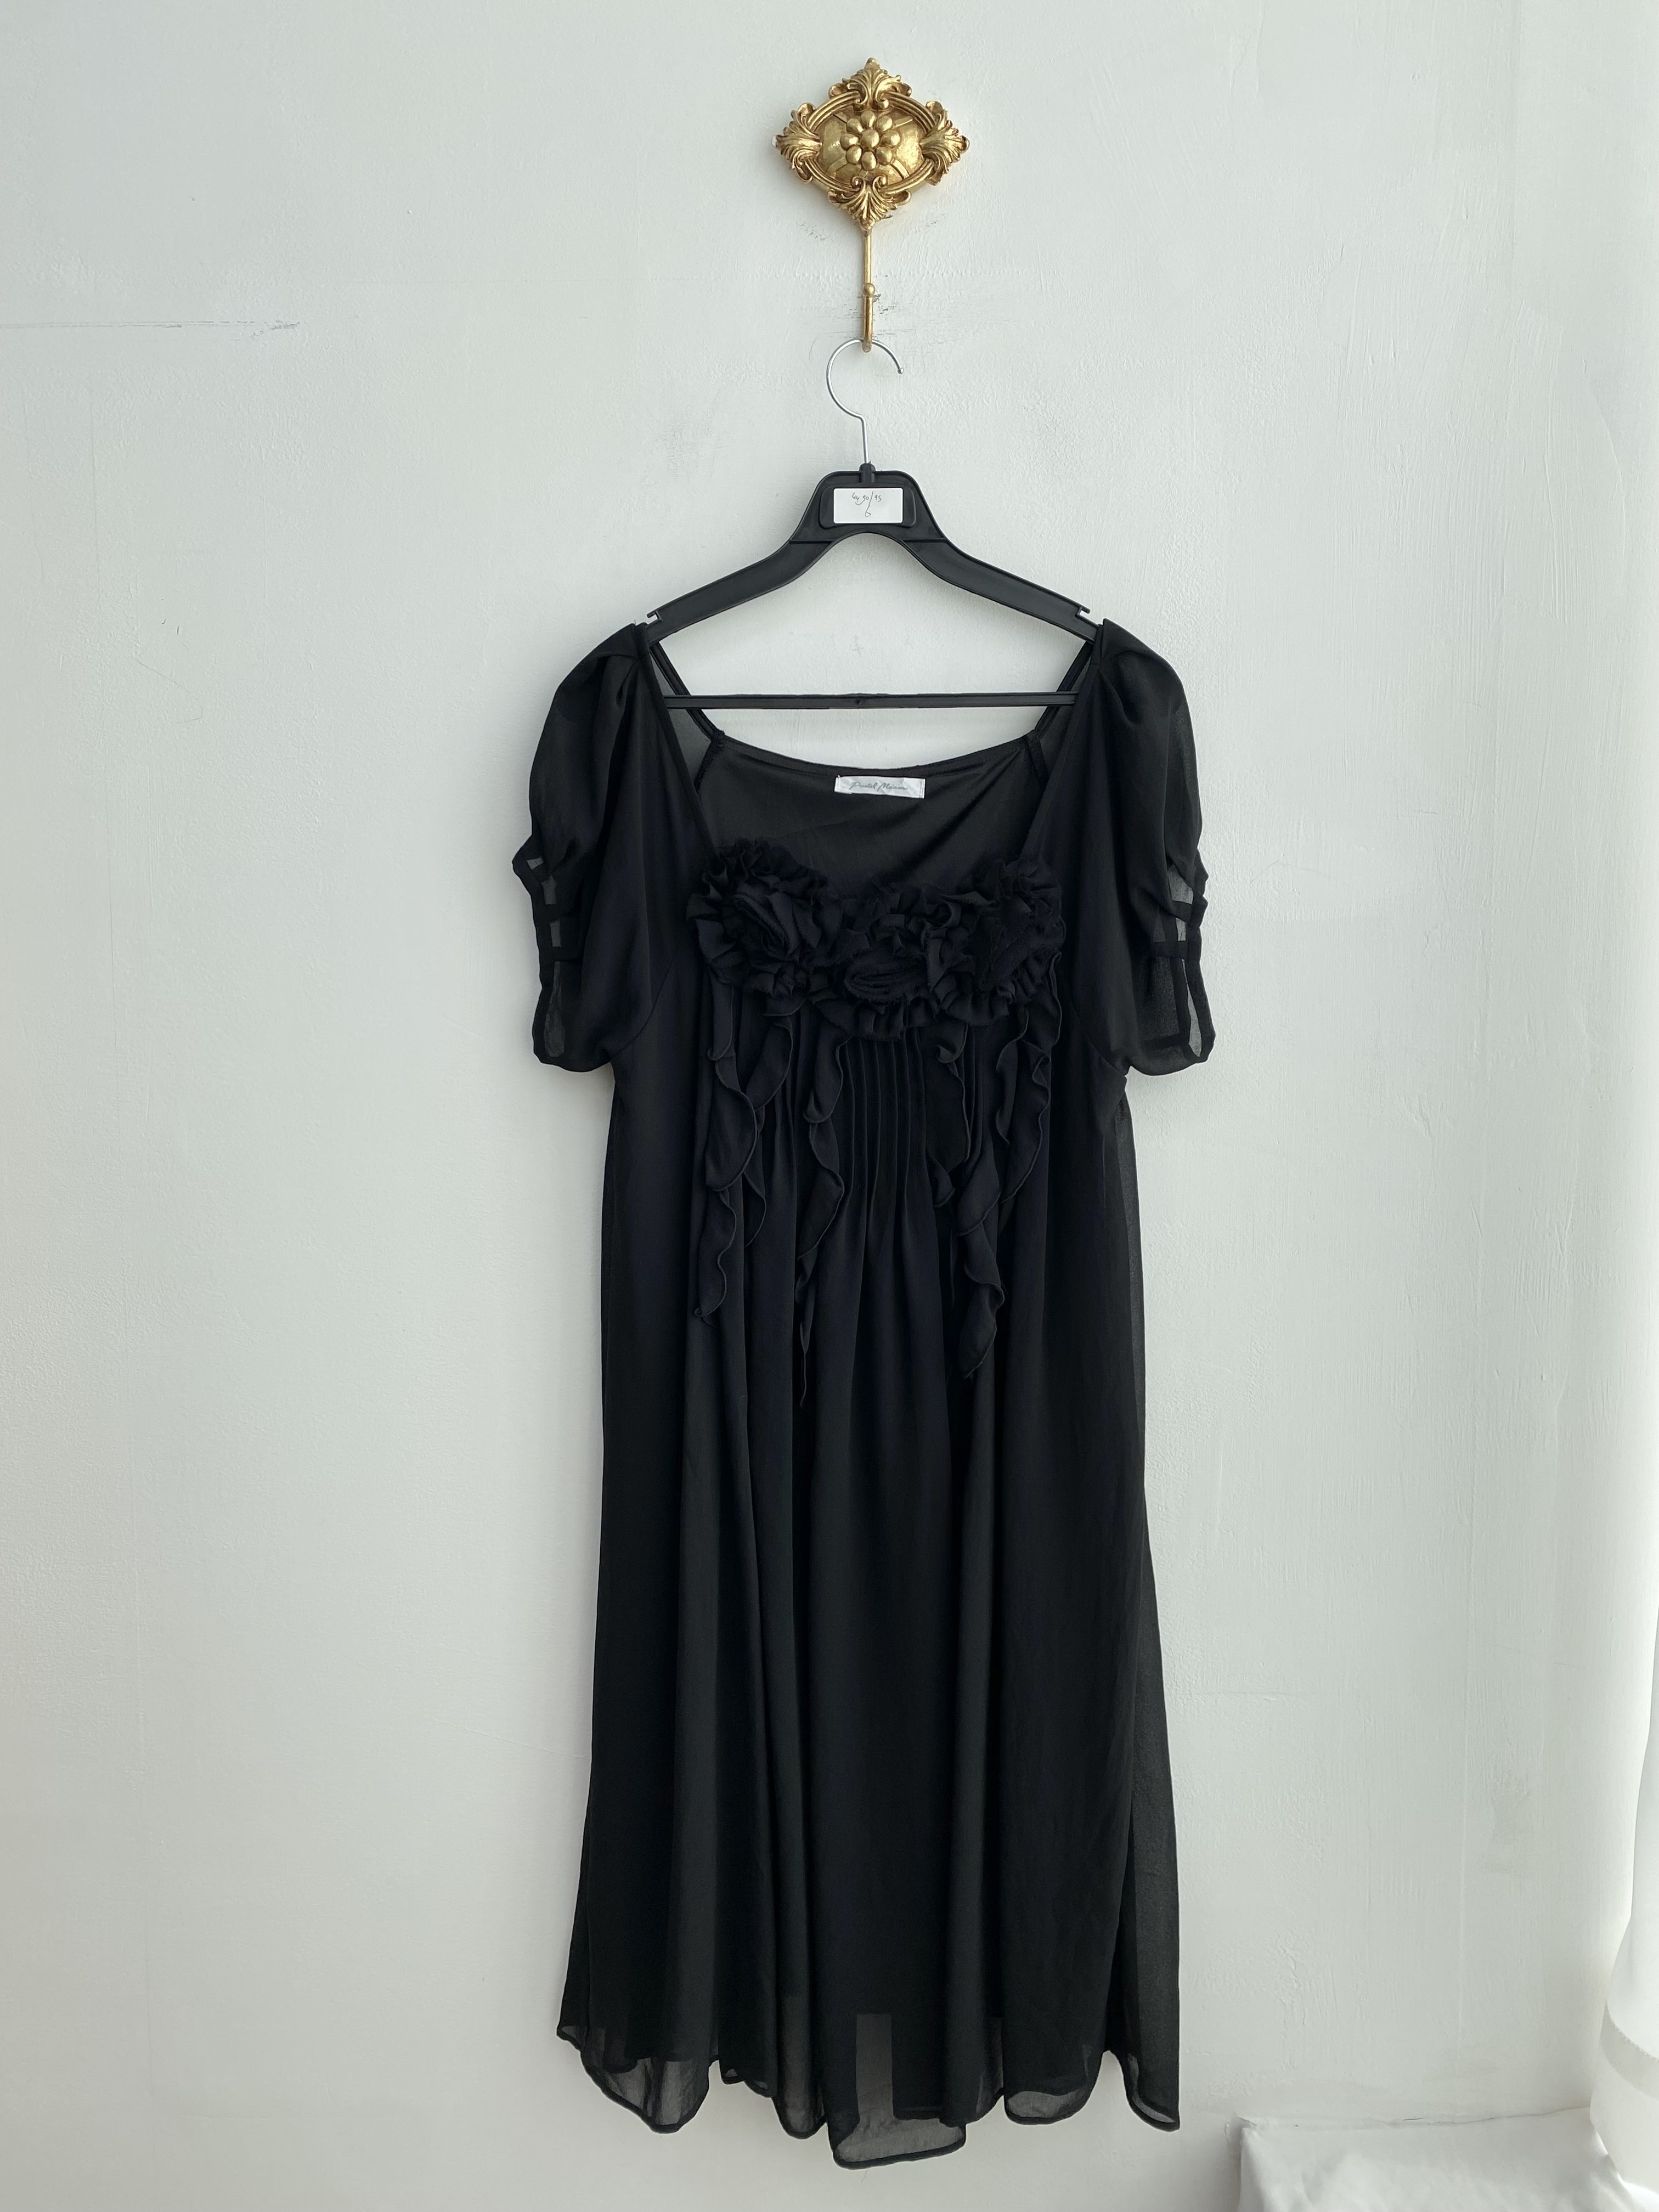 Black flower corsage frill poly dress